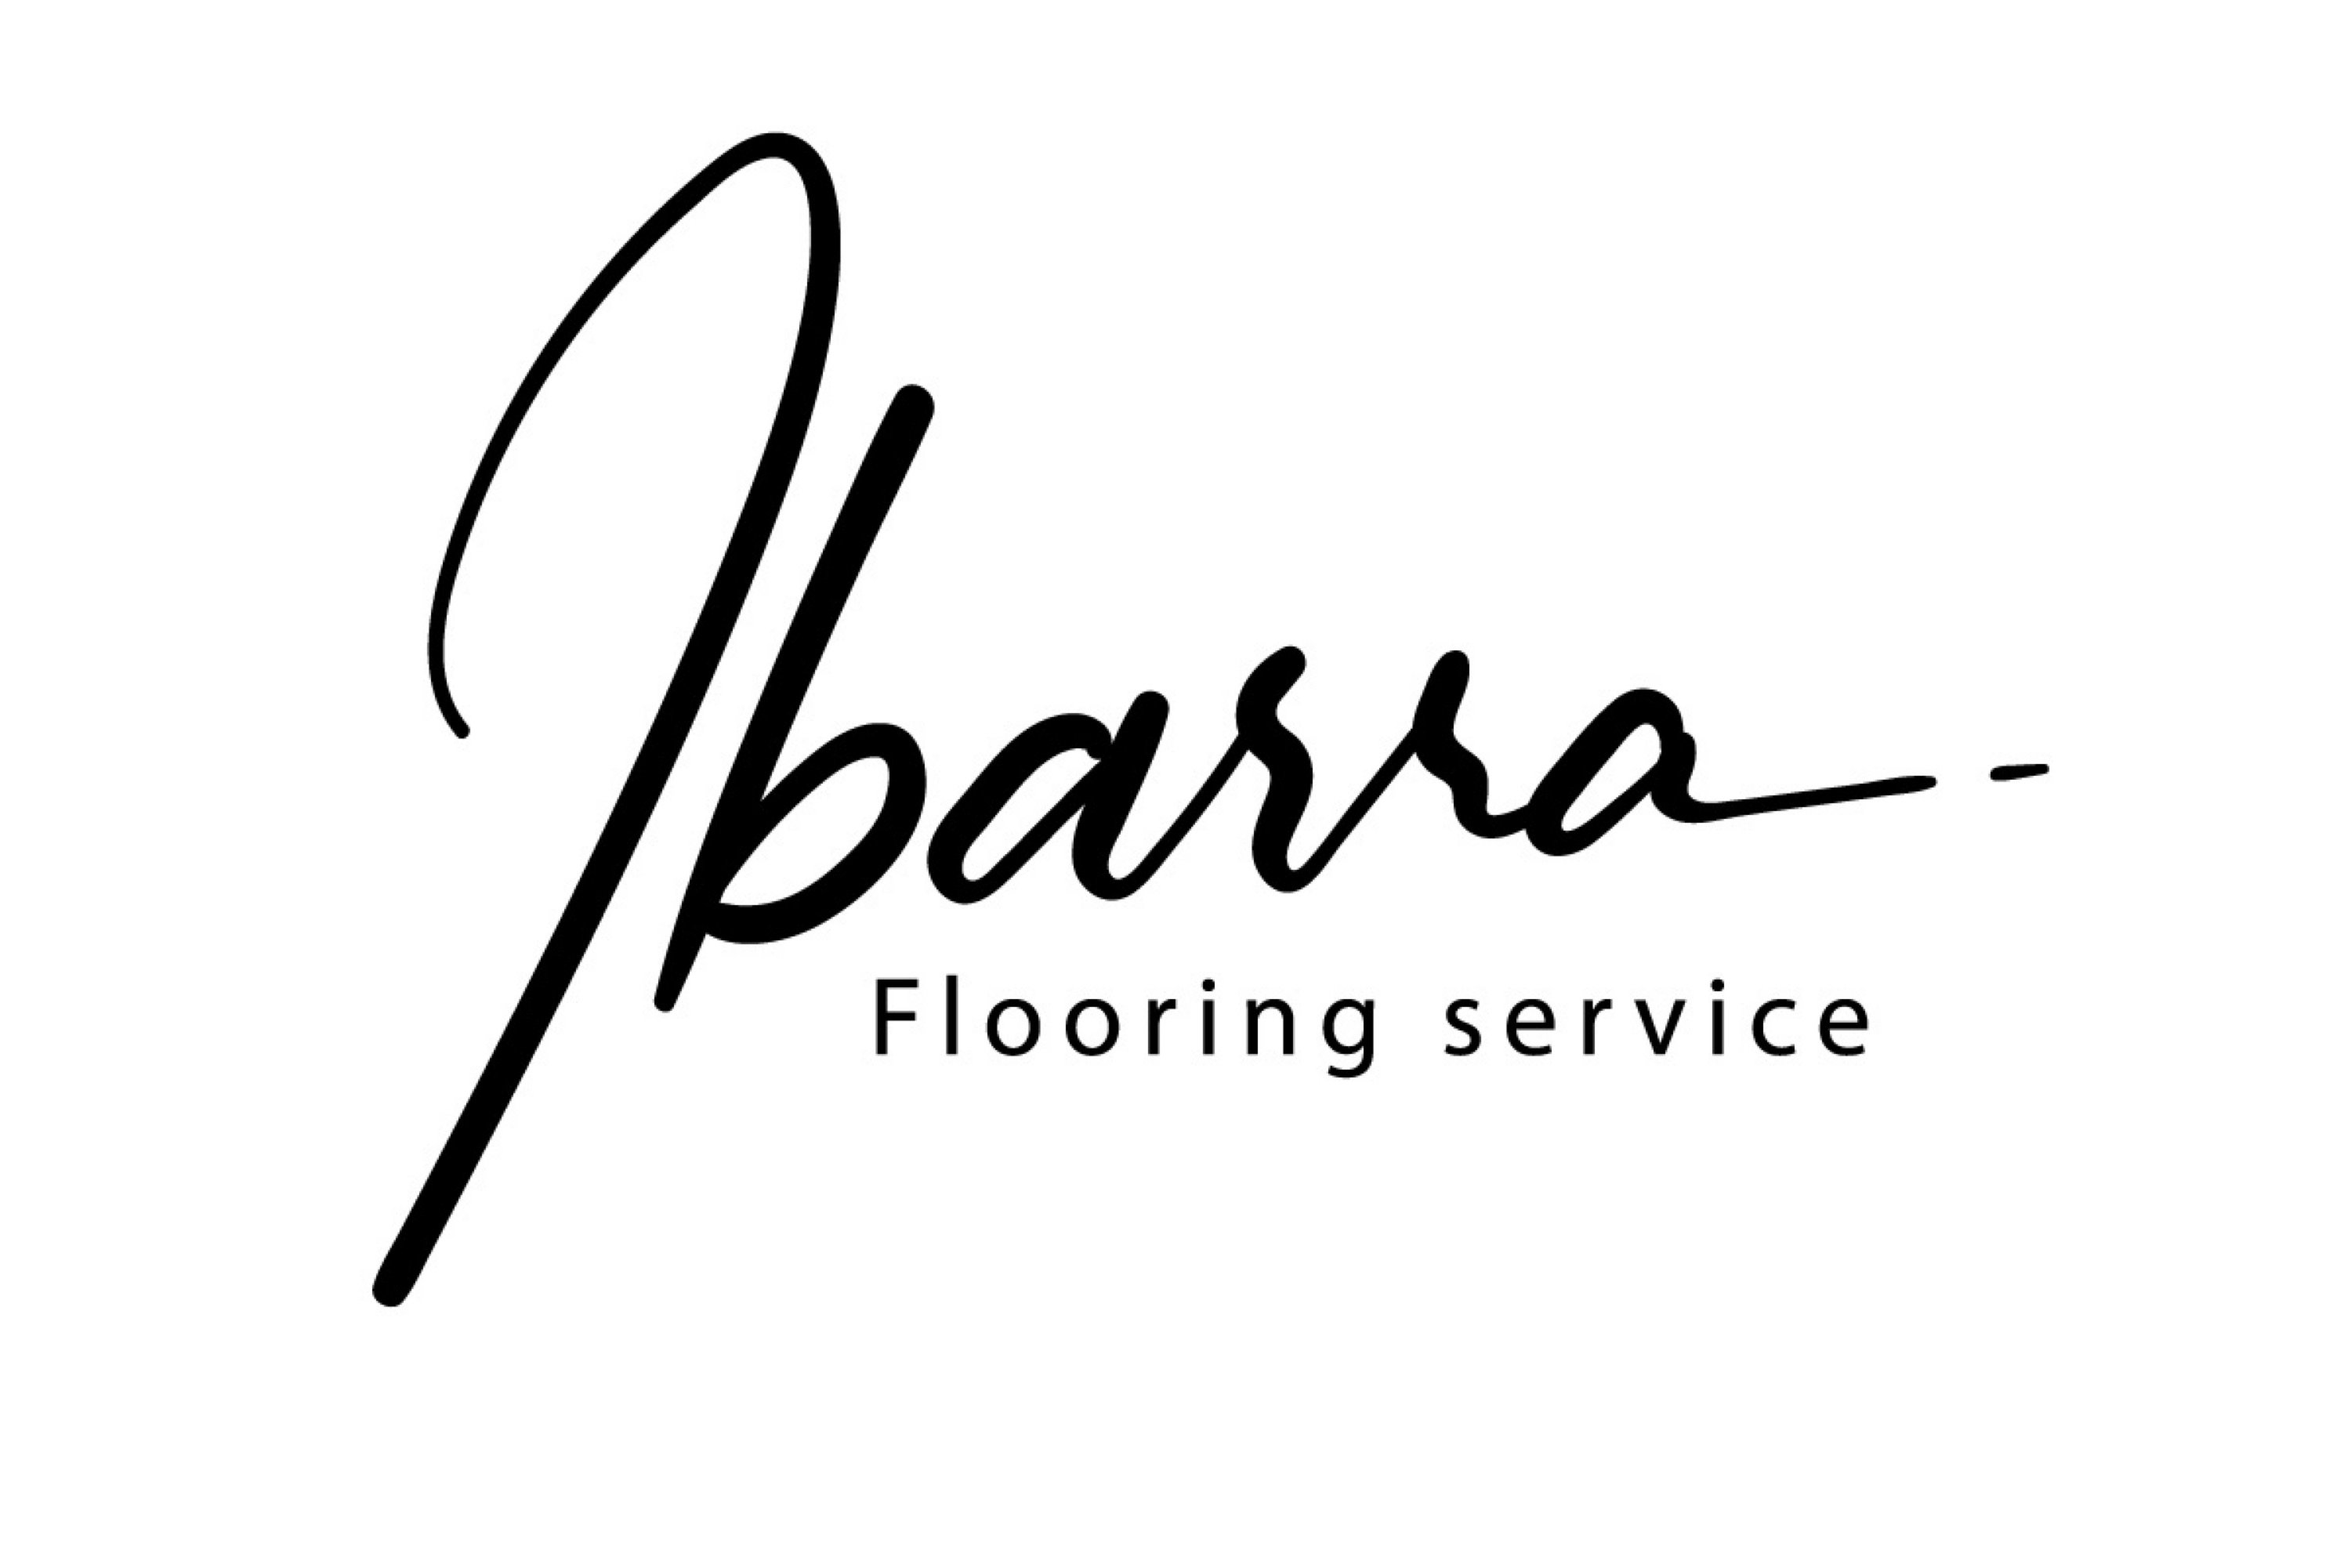 Ibarra Flooring Services Logo